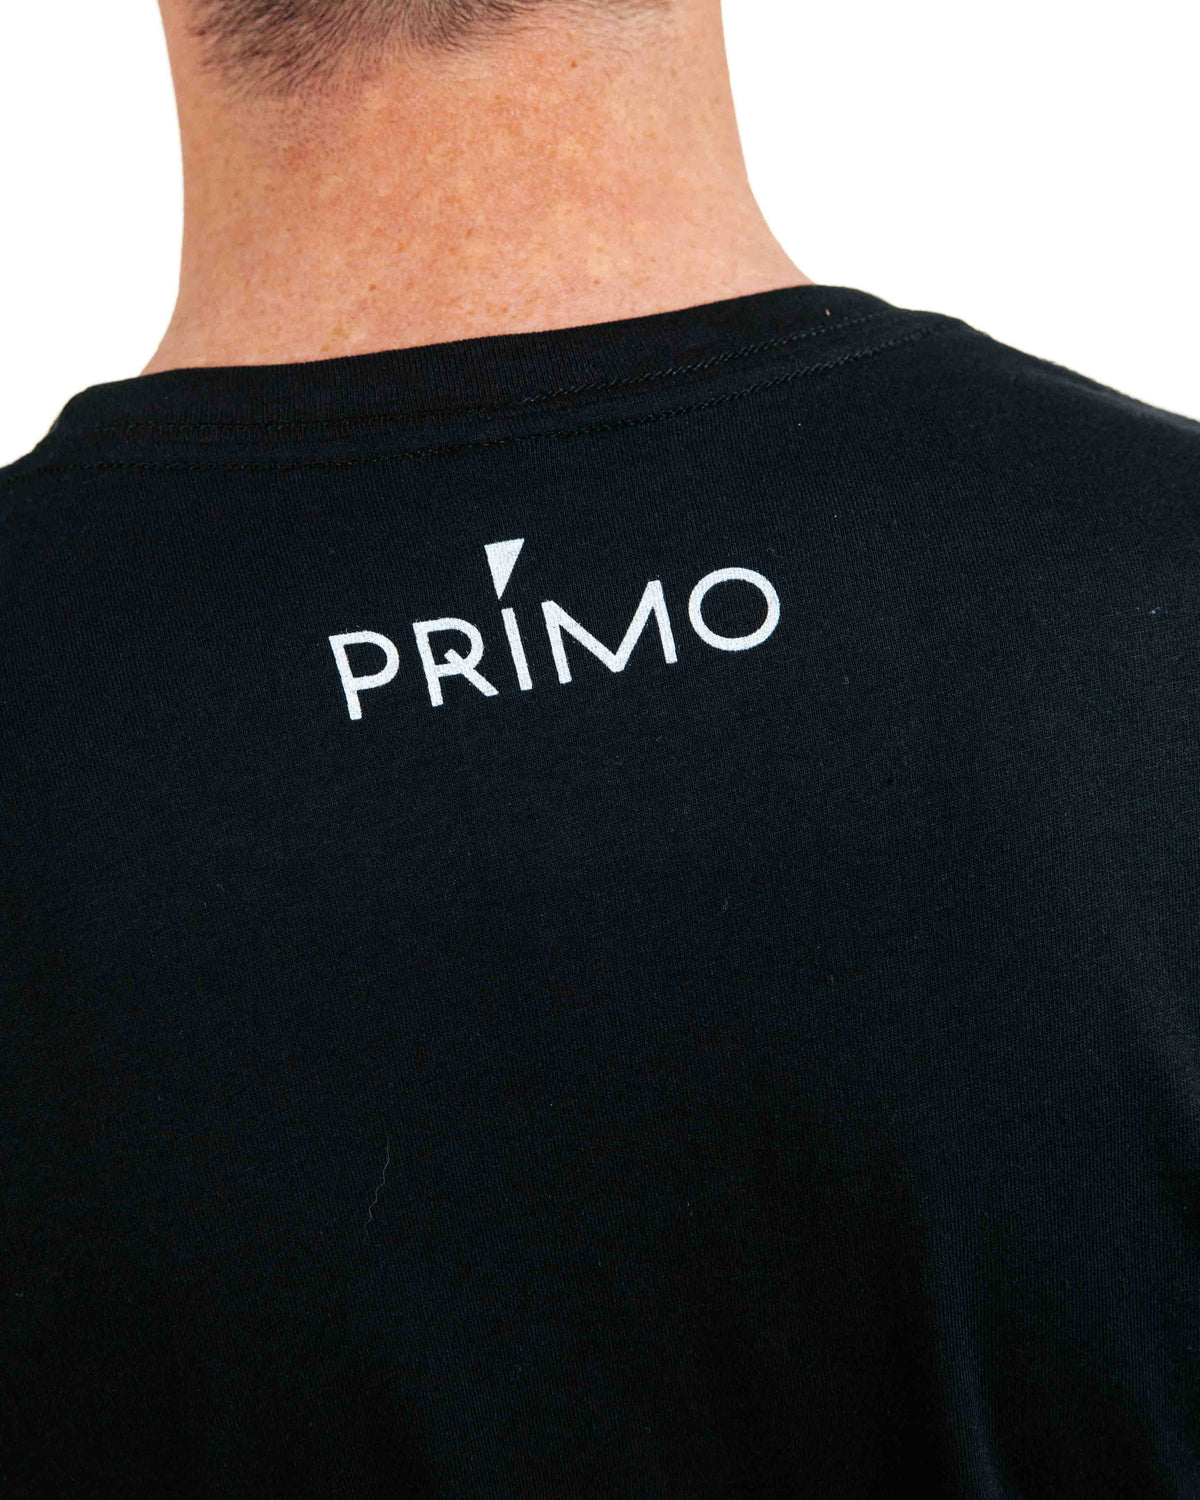 Primo Wordmark Logo Tee - Black